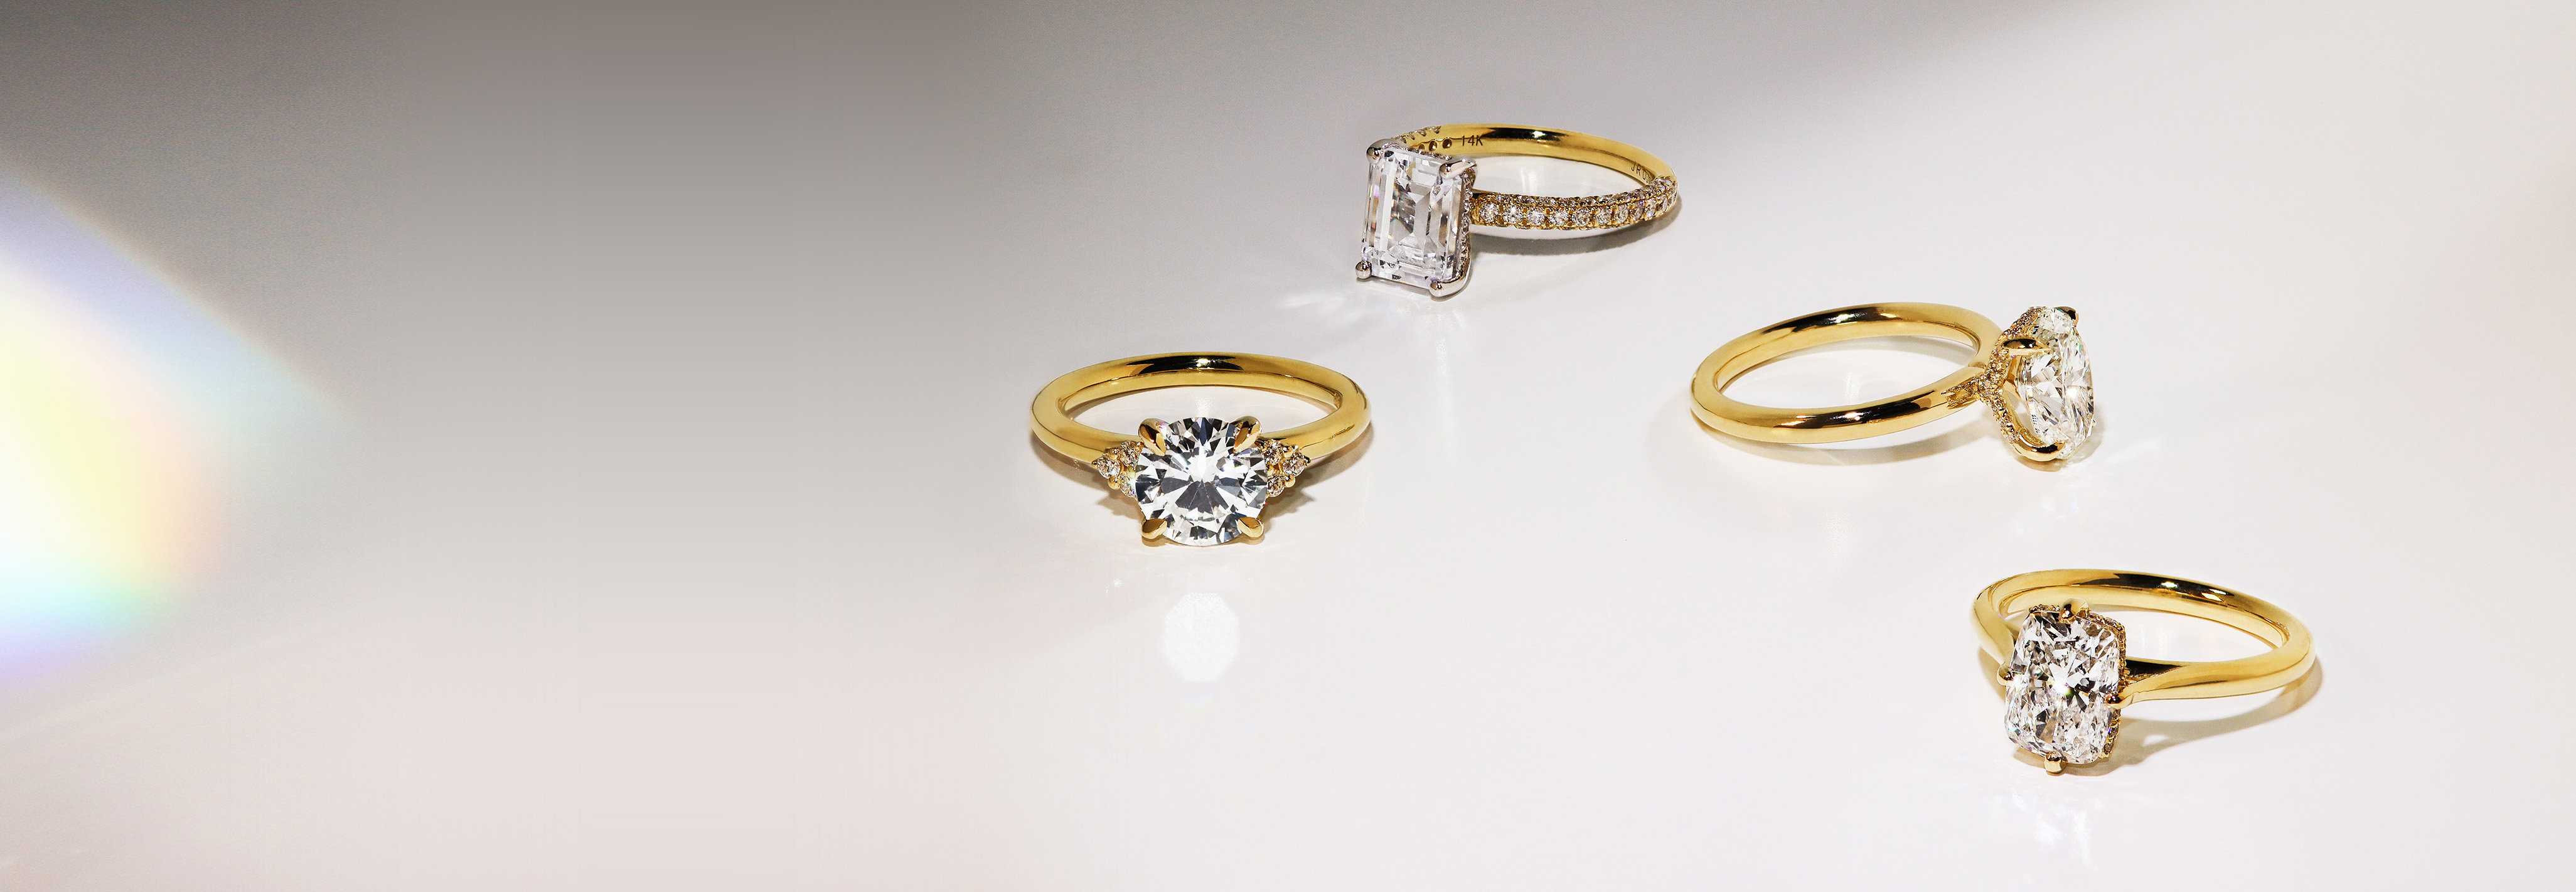 Bridal Jewelry Trends